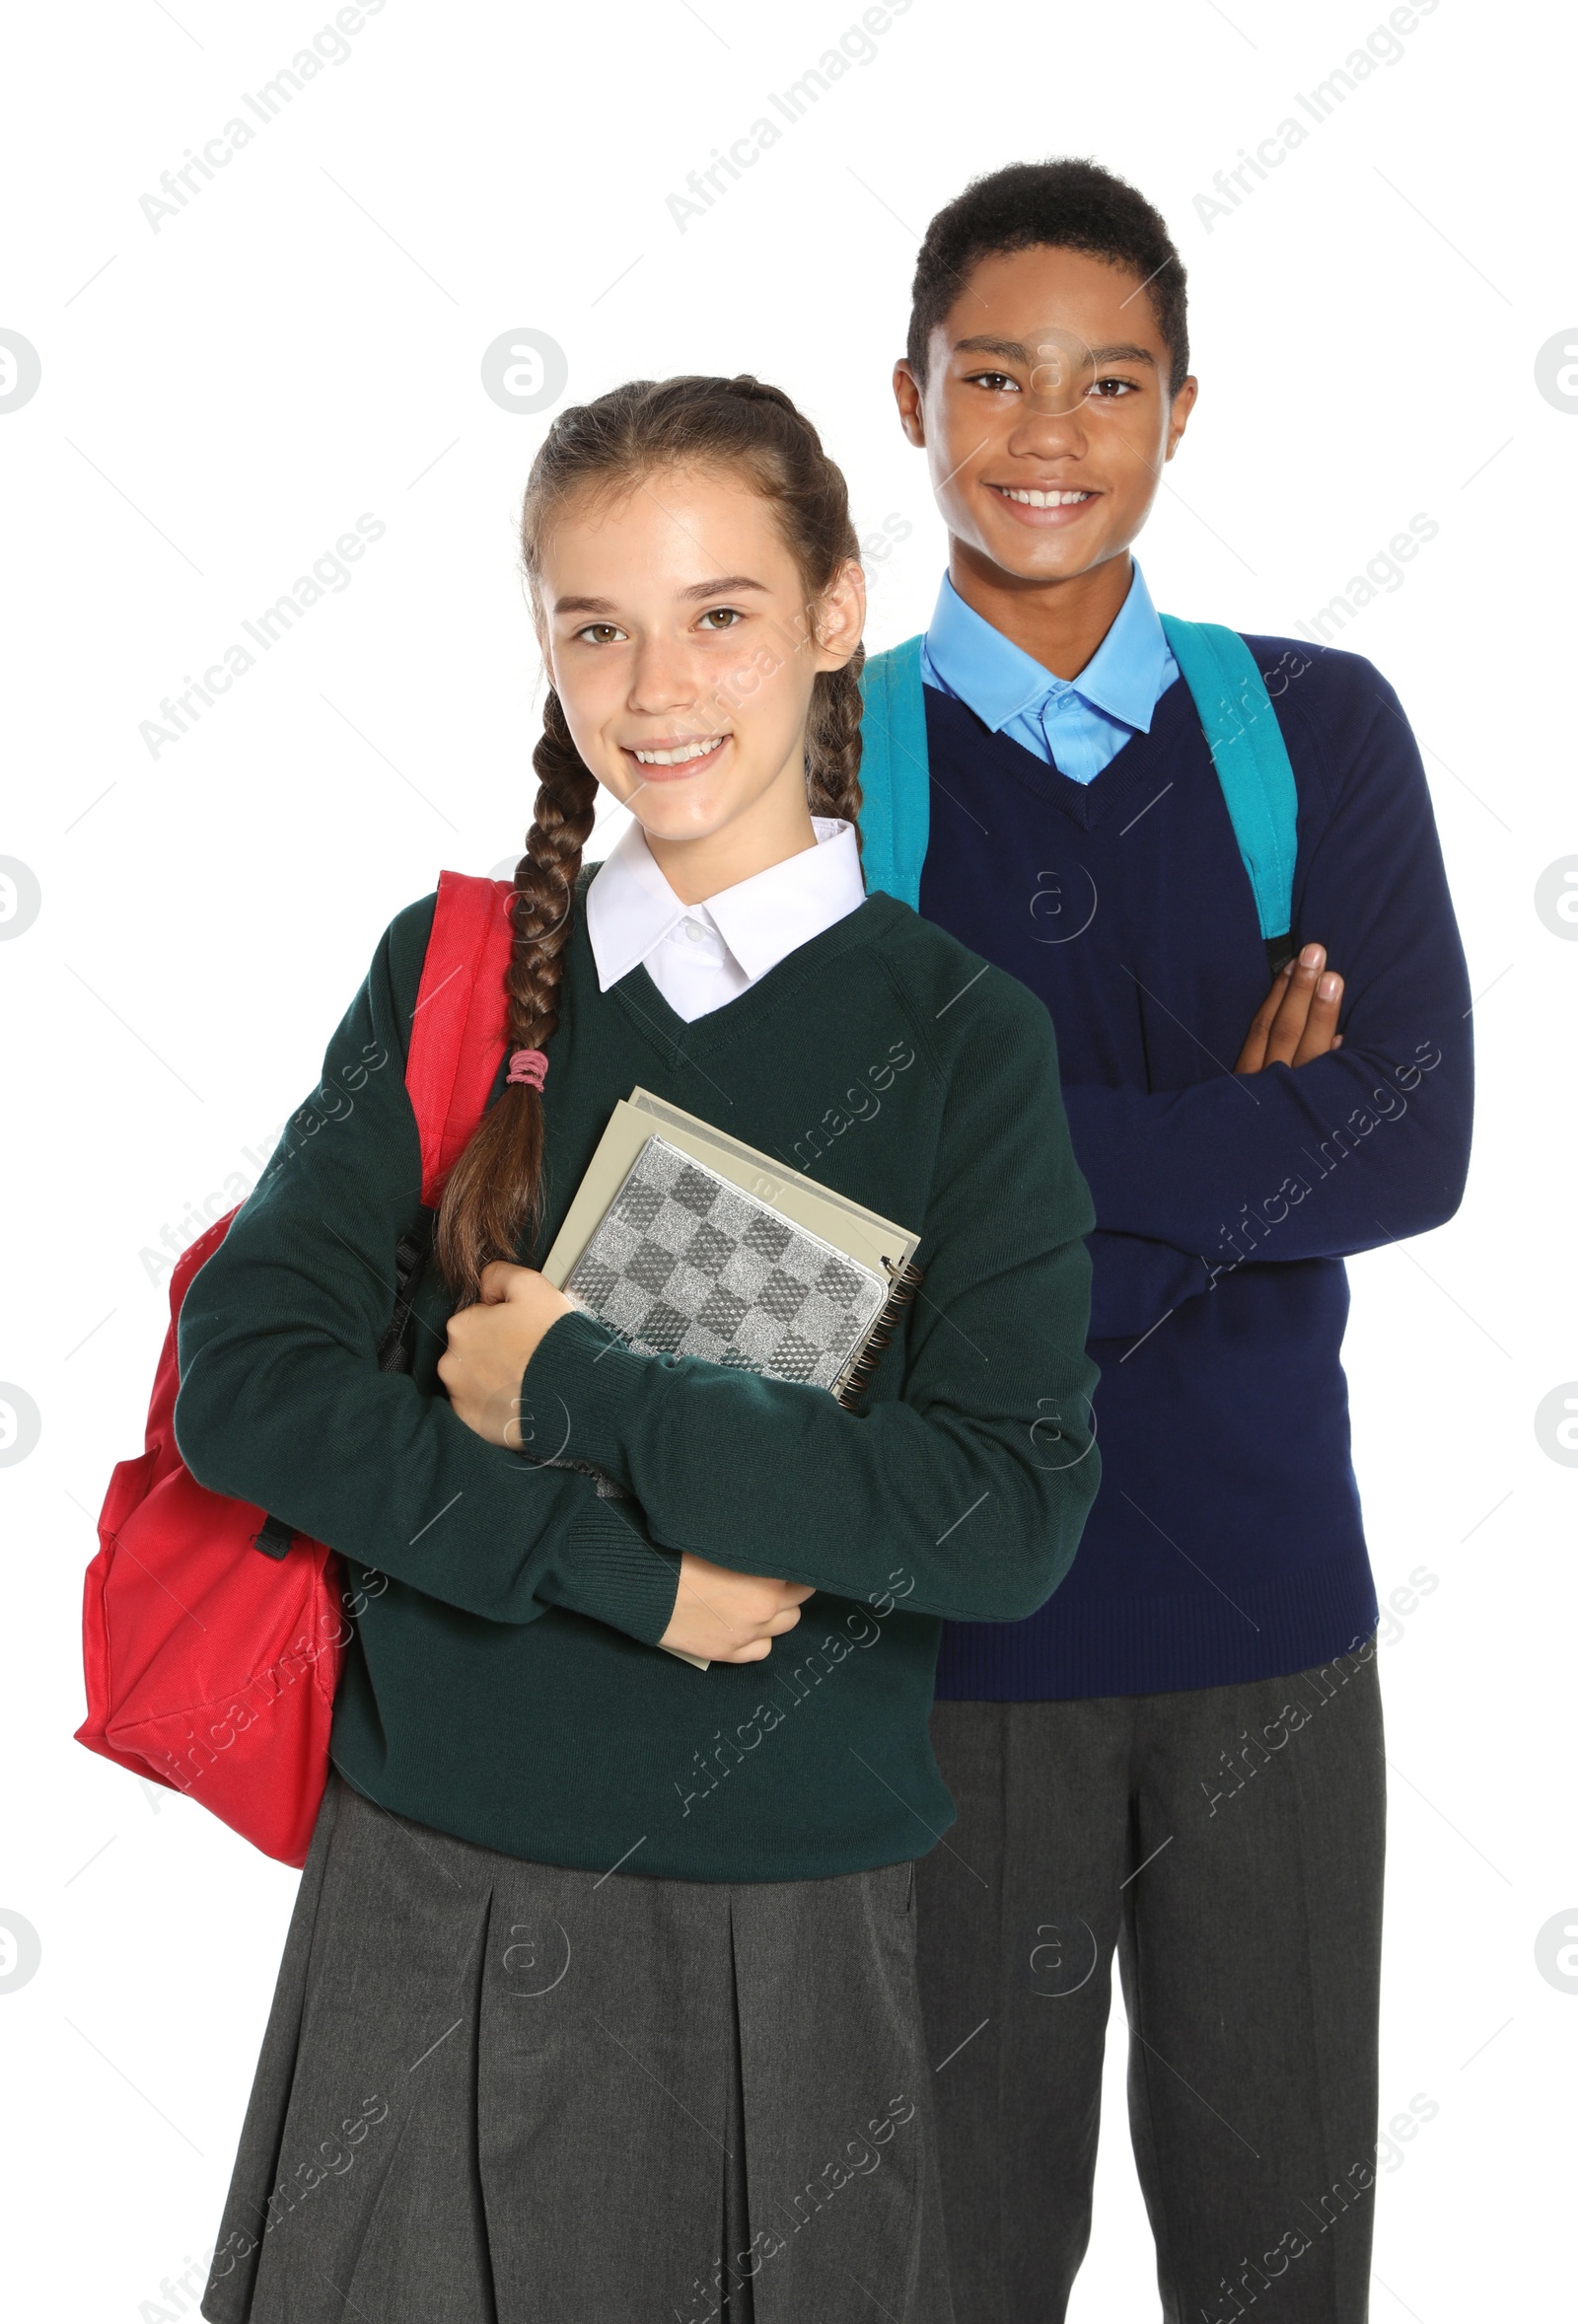 Photo of Teenagers in stylish school uniform on white background